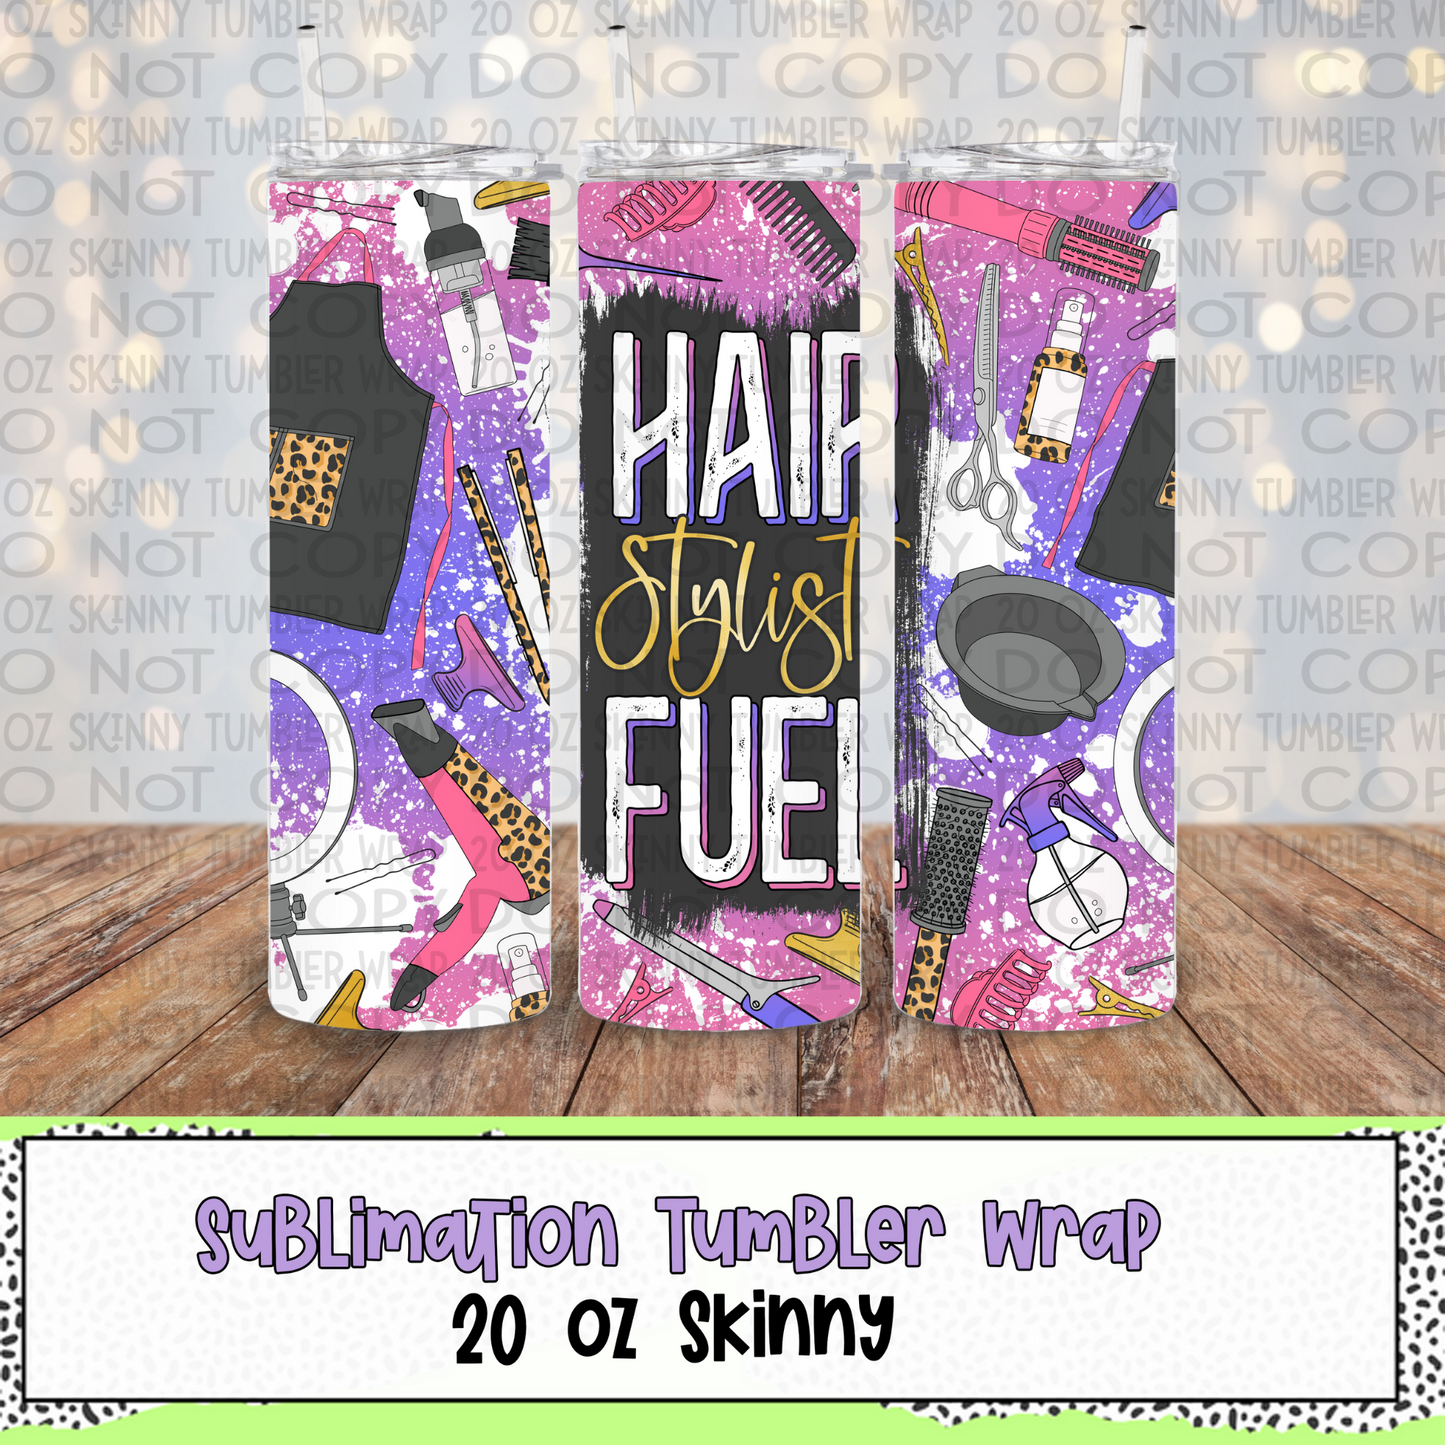 Hair Stylist Fuel 20 Oz Skinny Tumbler Wrap - Sublimation Transfer - RTS